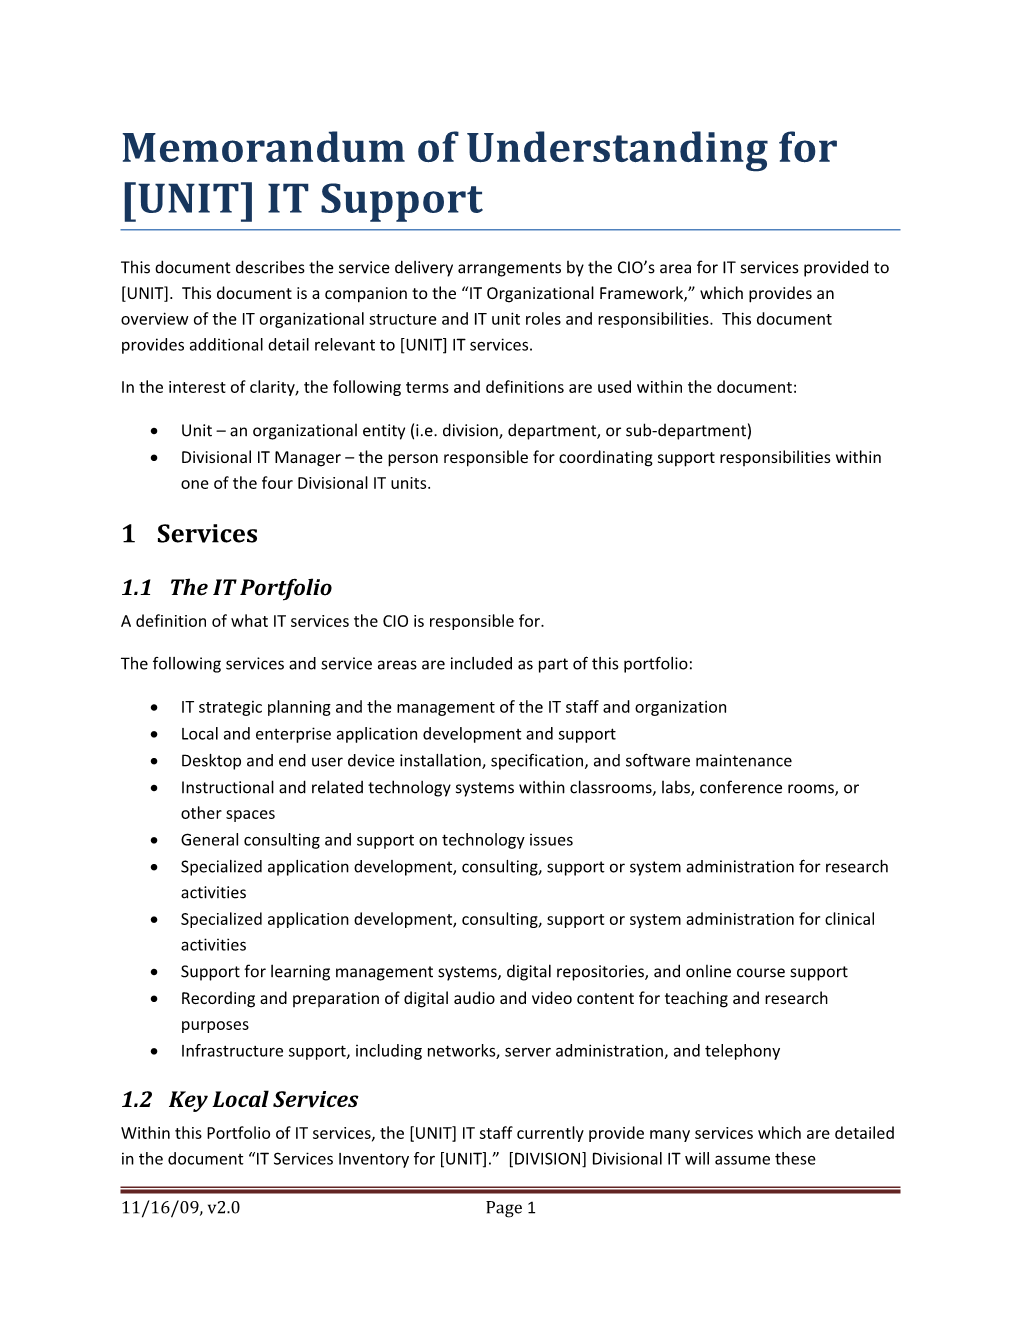 Memorandum of Understanding for UNIT IT Support